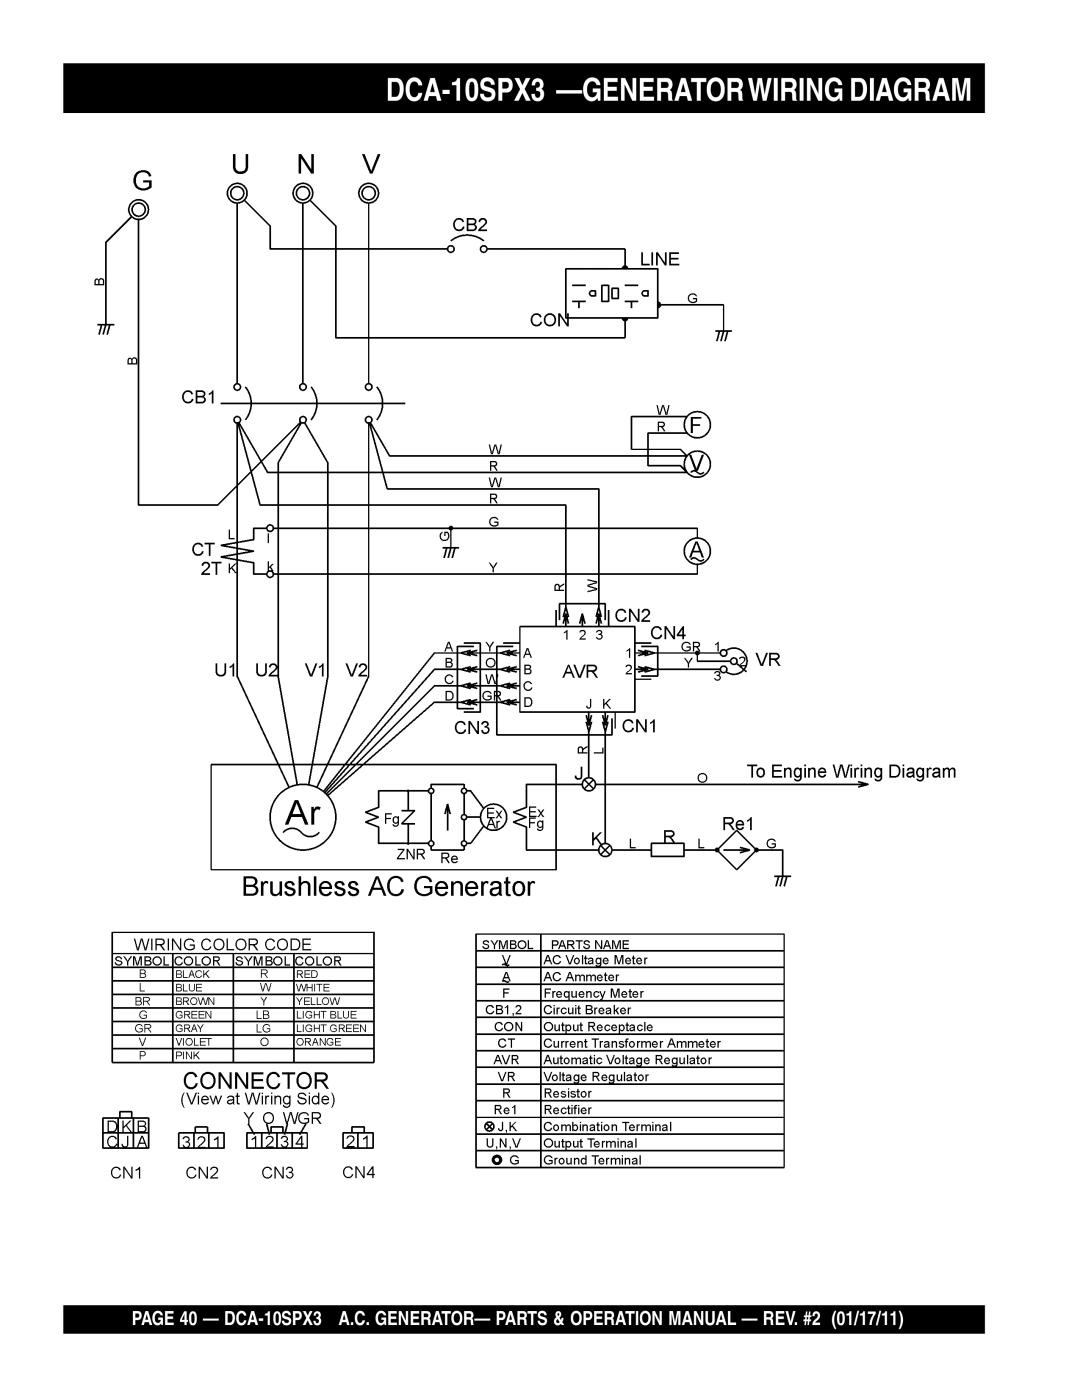 Multiquip DCA10SPX3 manual DCA-10SPX3 -GENERATORWIRING DIAGRAM 